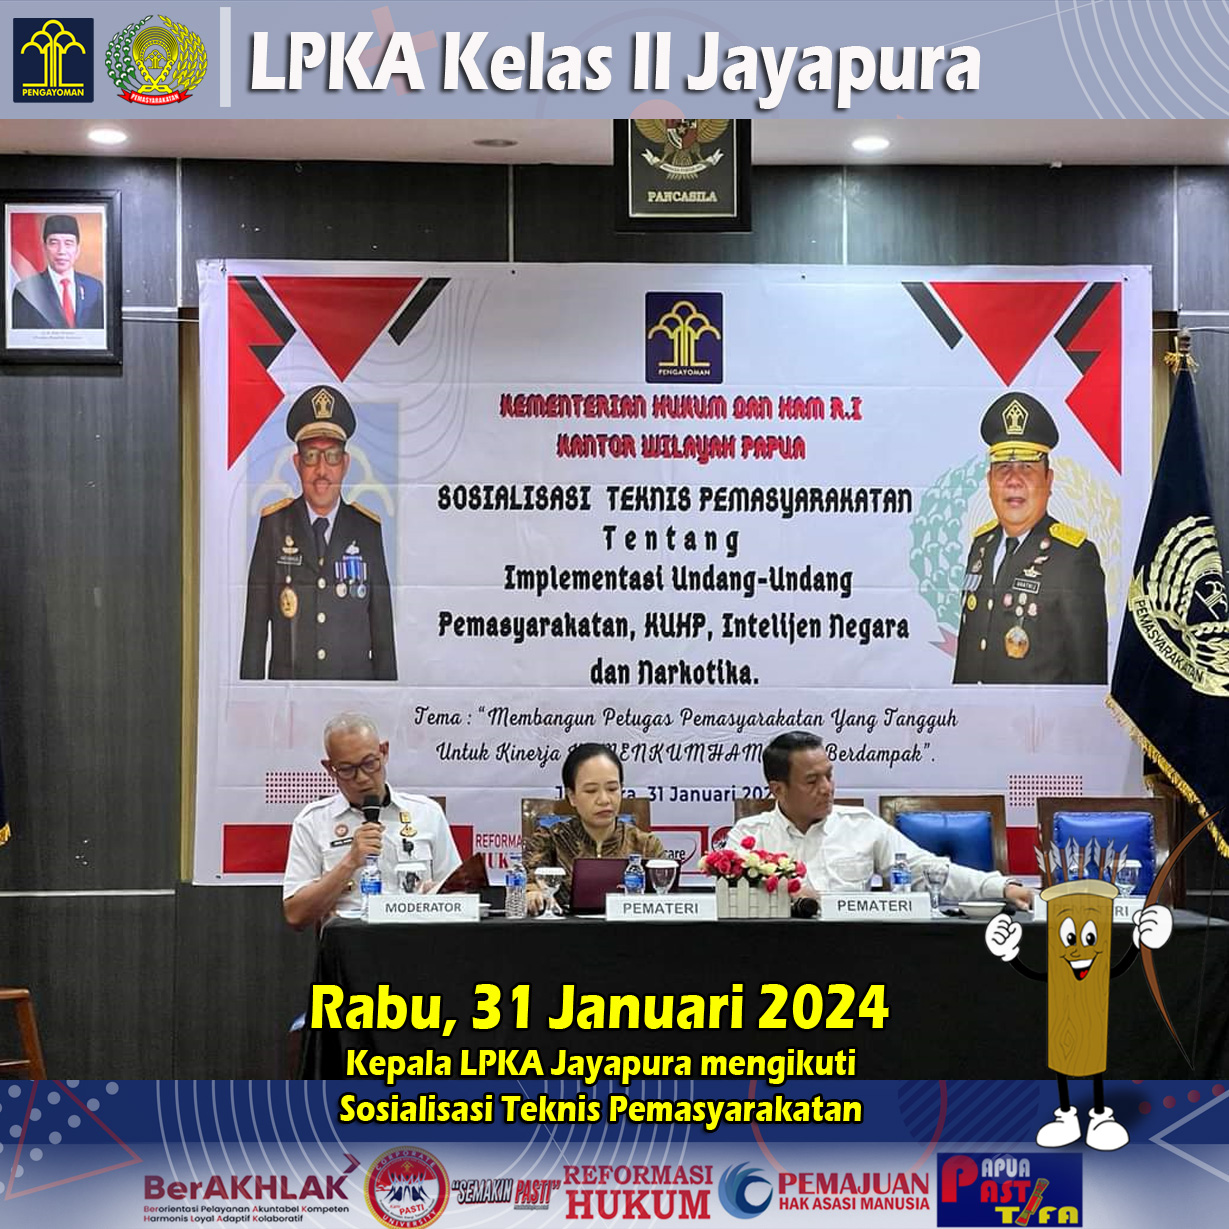 LPKA Jayapura mengikuti Sosialisasi Teknis Pemasyarakatan tentang Implementasi Undang-undang Pemasyarakatan, KUHP, Intelijen Negara dan Narkotika